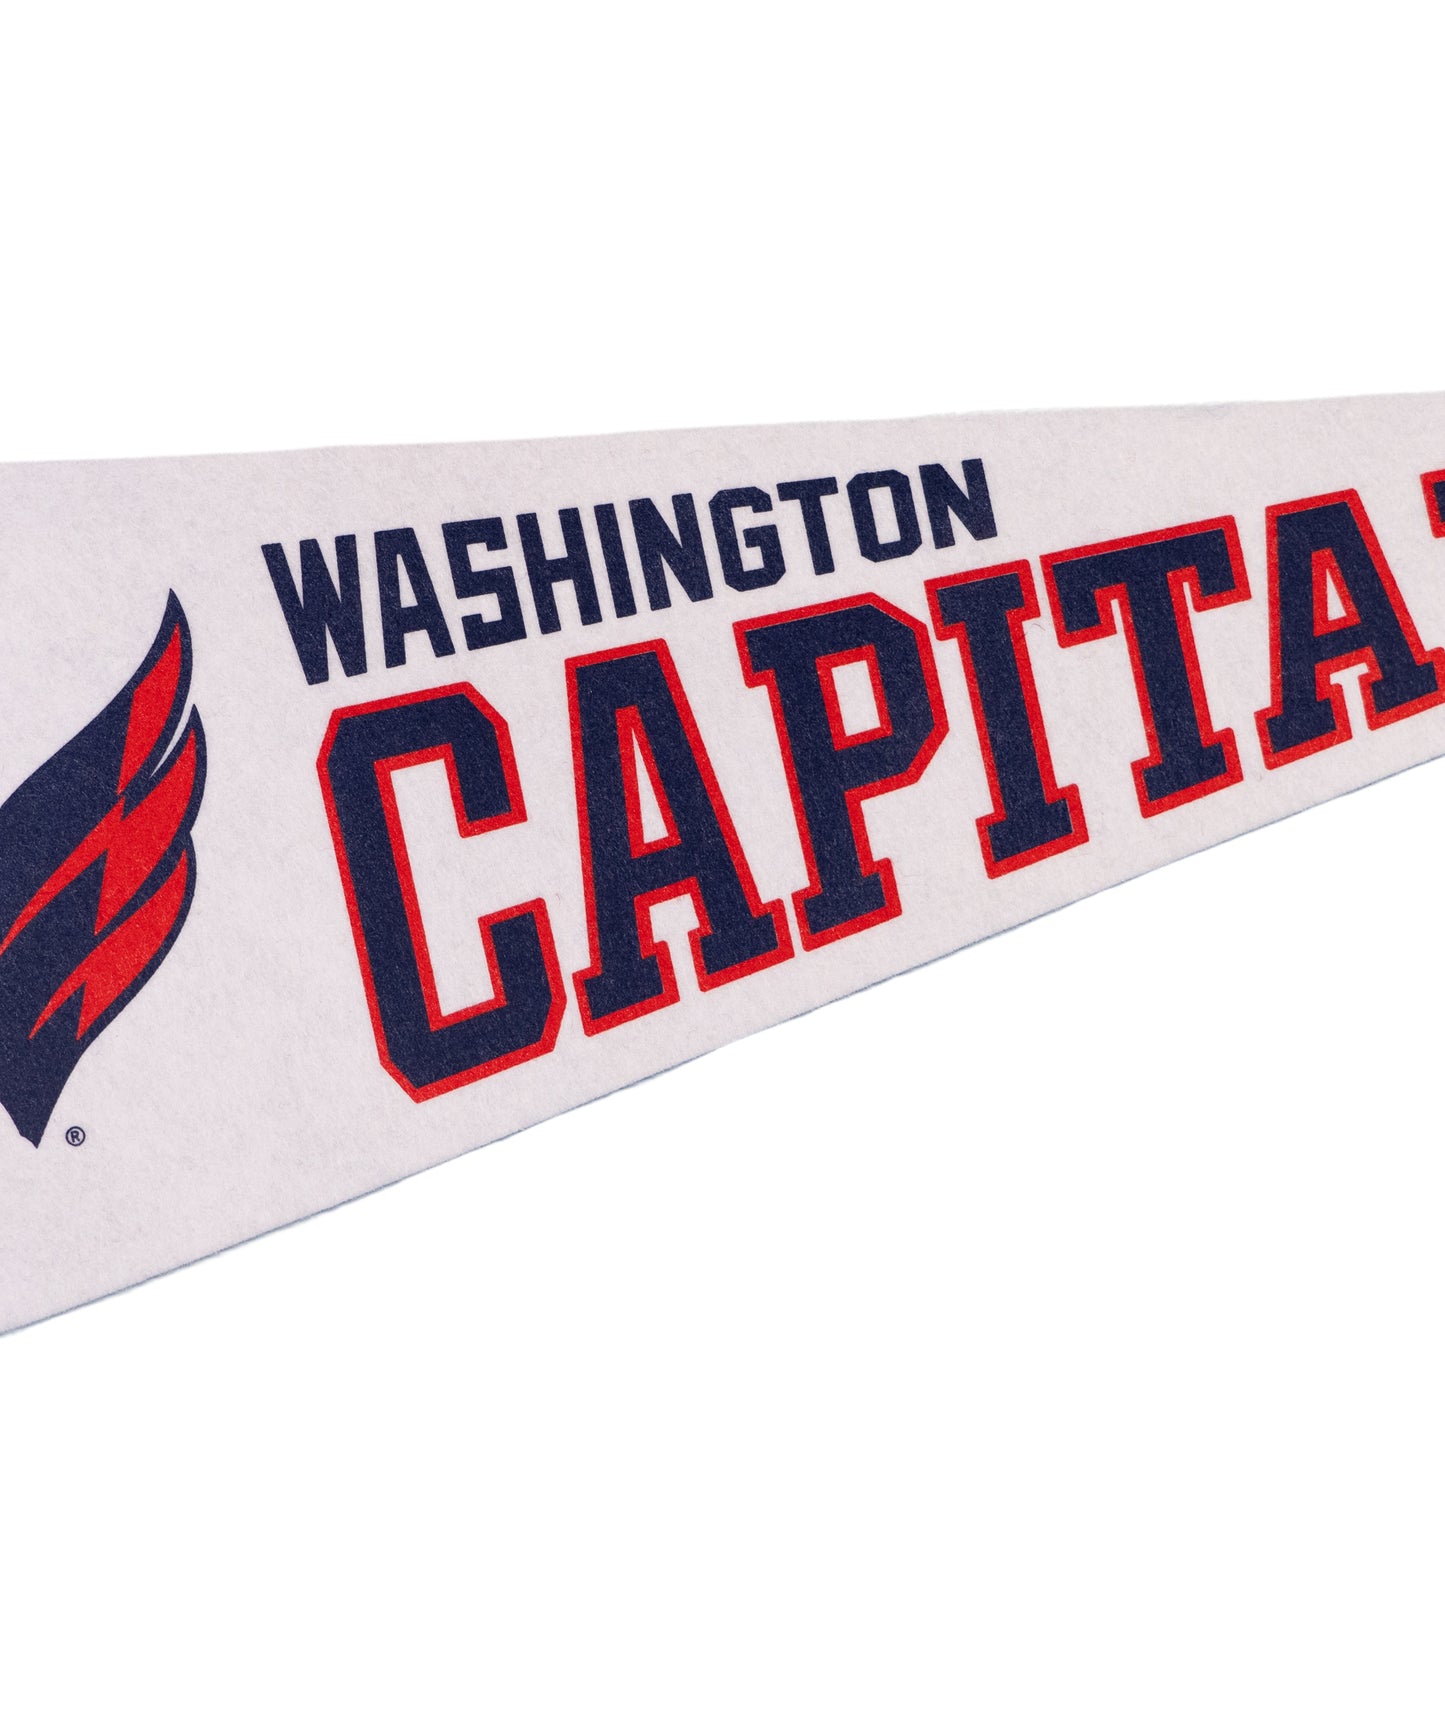 Washington Capitals Pennant • NHL x Oxford Pennant